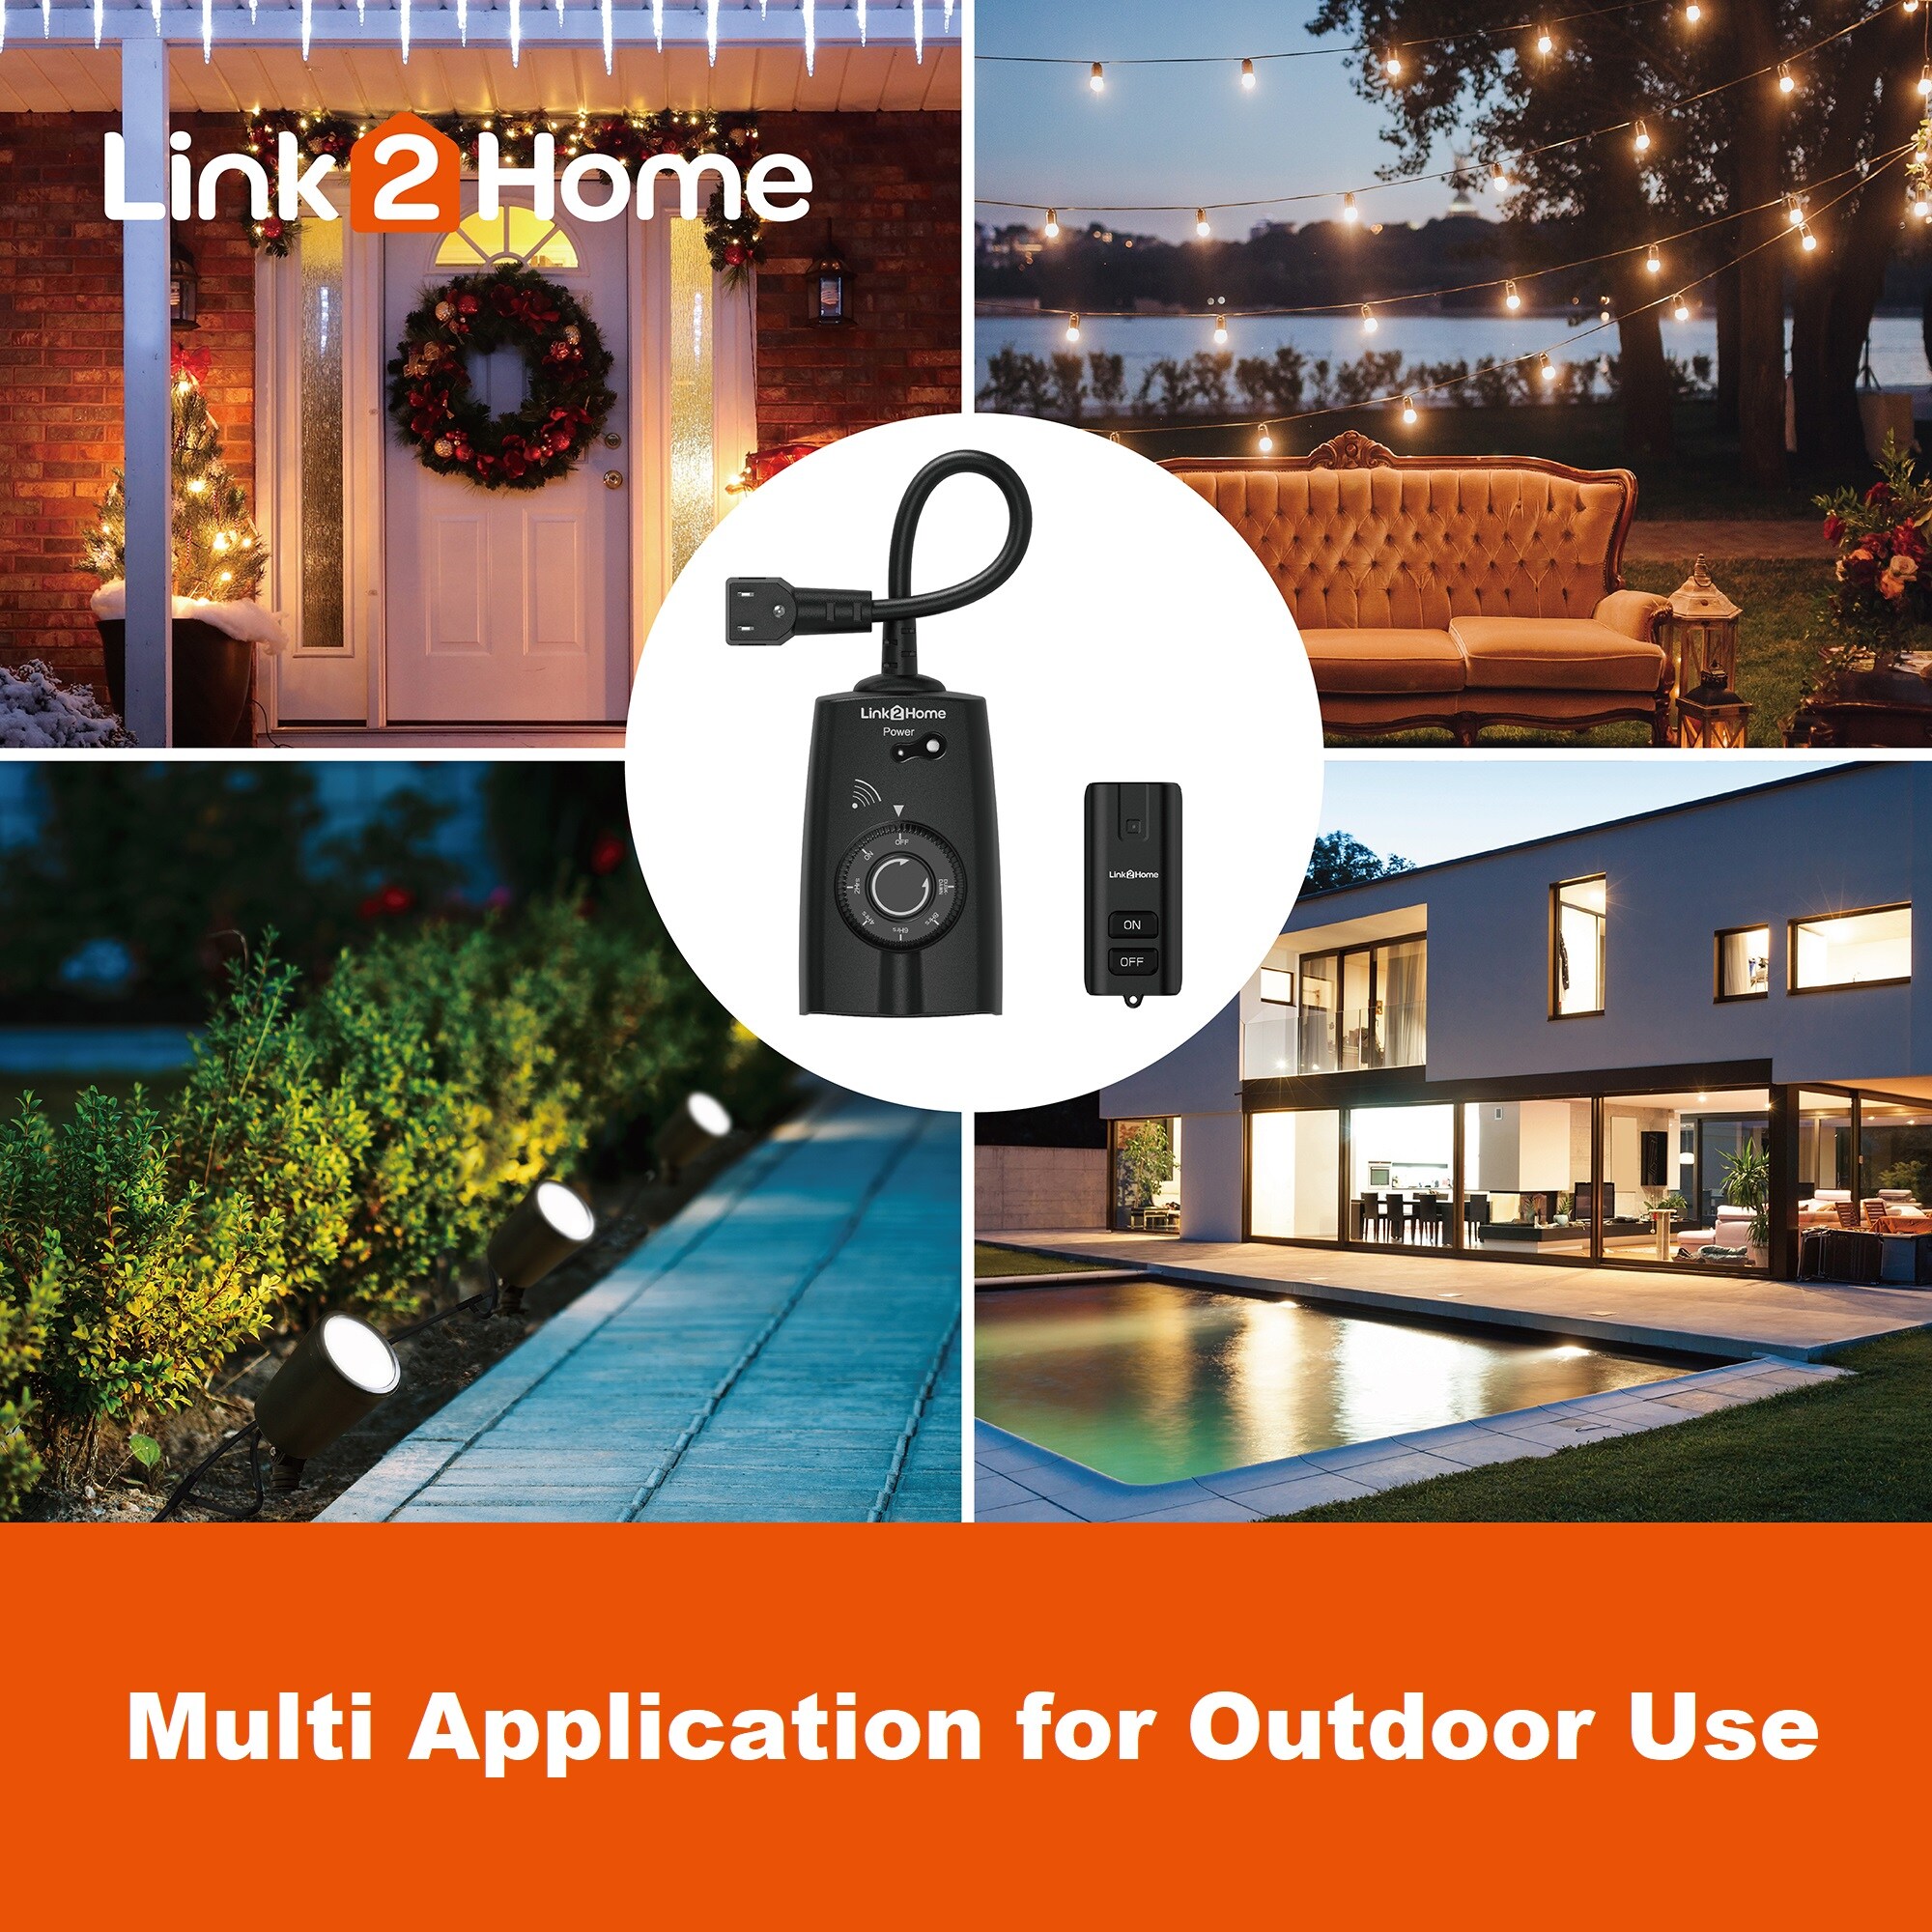 LINK2HOME Link2Homw Outdoor Wireless Black/Matt Remote Control in